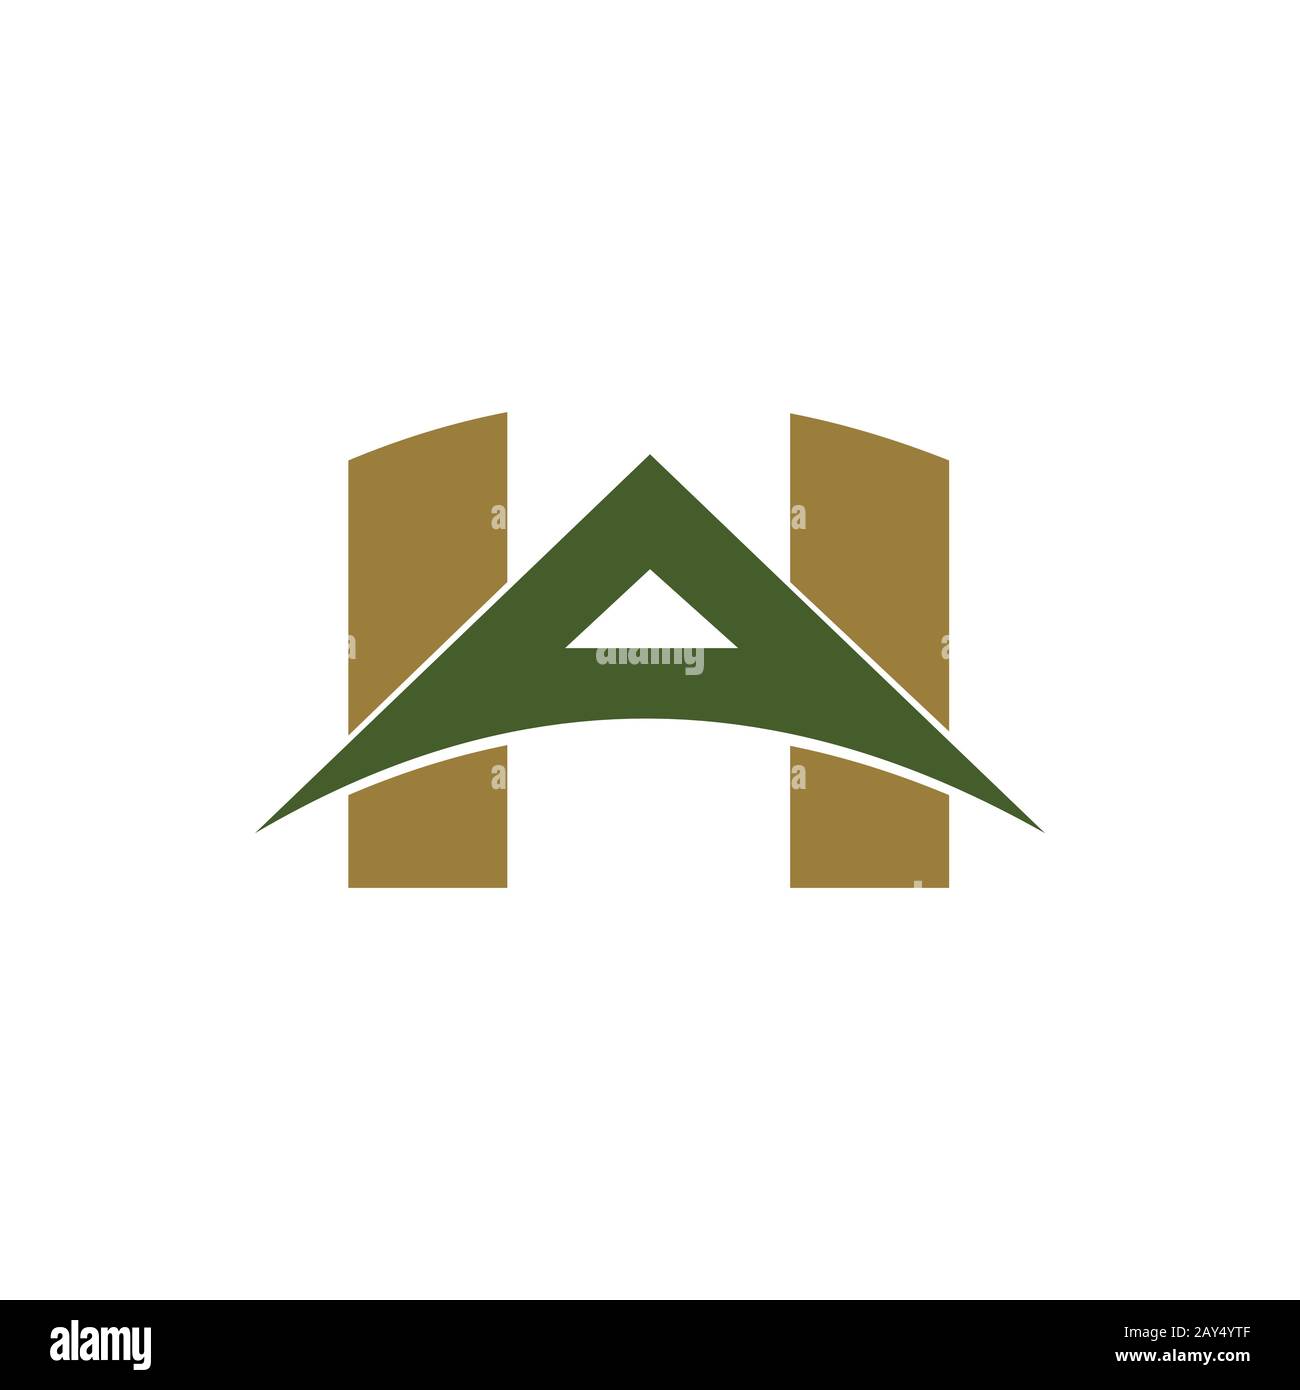 Initial letter ah or ha logo design template Stock Vector